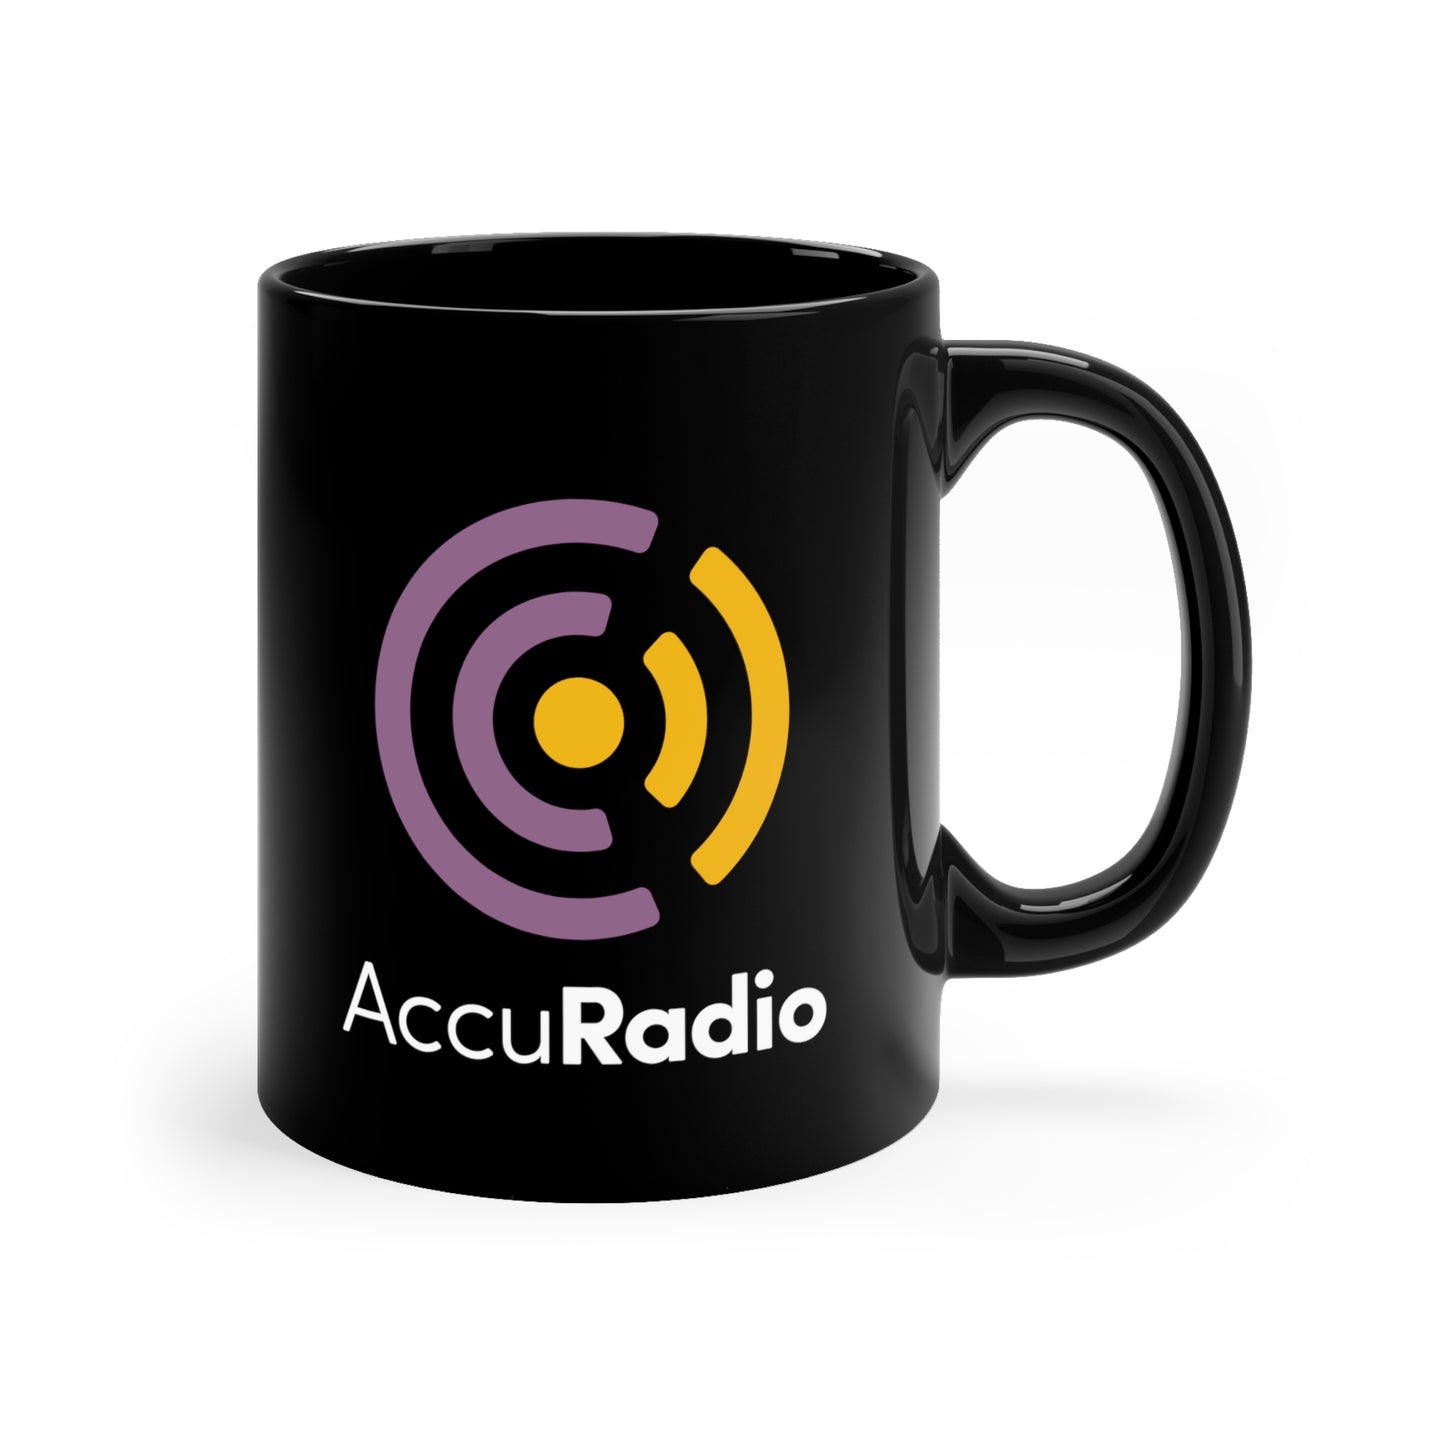 AccuRadio classic mug